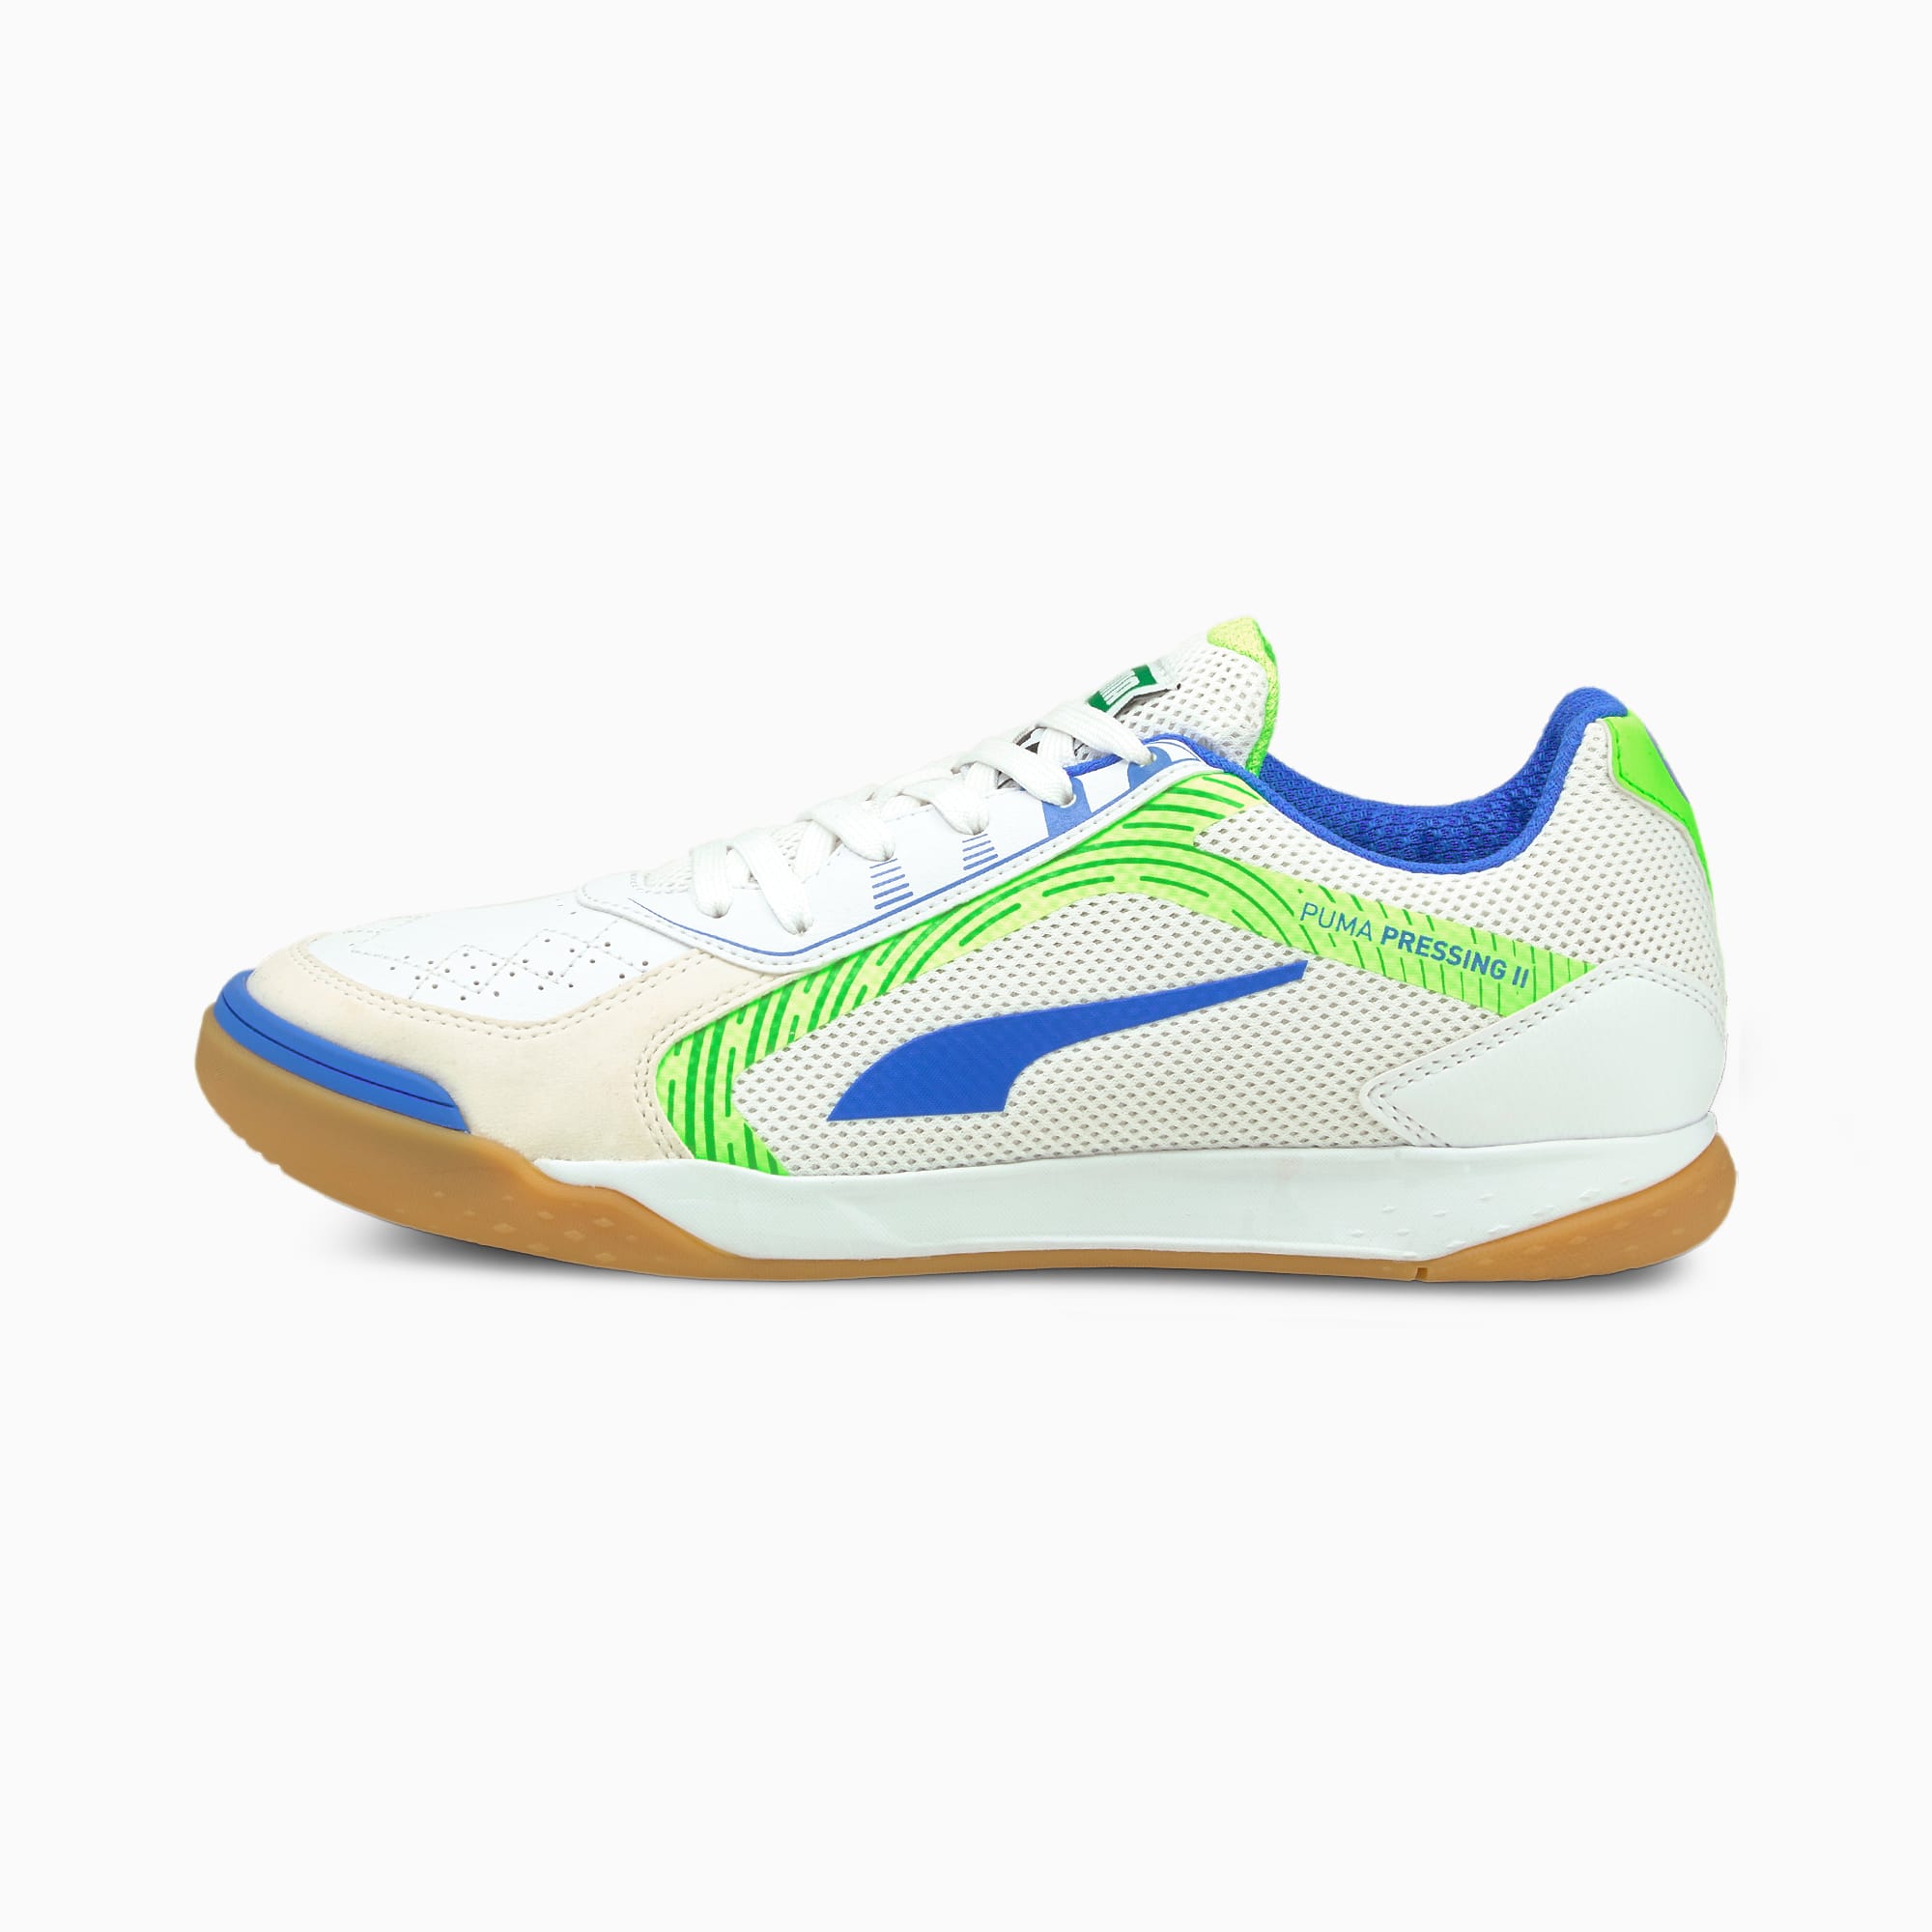 PUMA Chaussures de futsal PRESSING II pour Homme, Blanc/Bleu/Vert, Taille 39, Chaussures